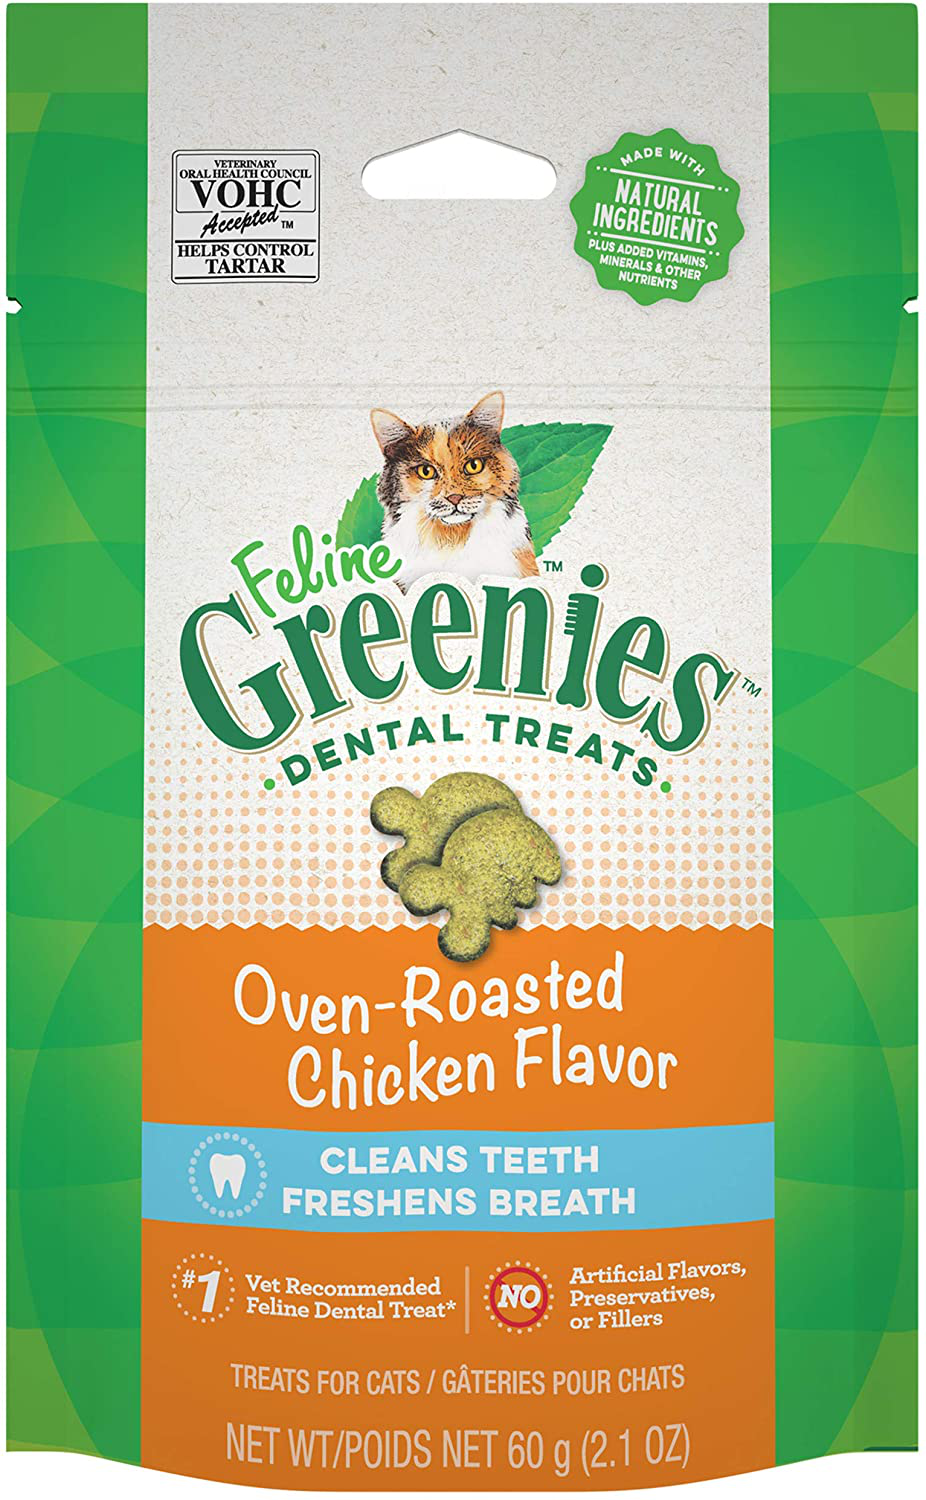 FELINE GREENIES Natural Dental Care Cat Treats, Chicken Flavor, All Bag Sizes